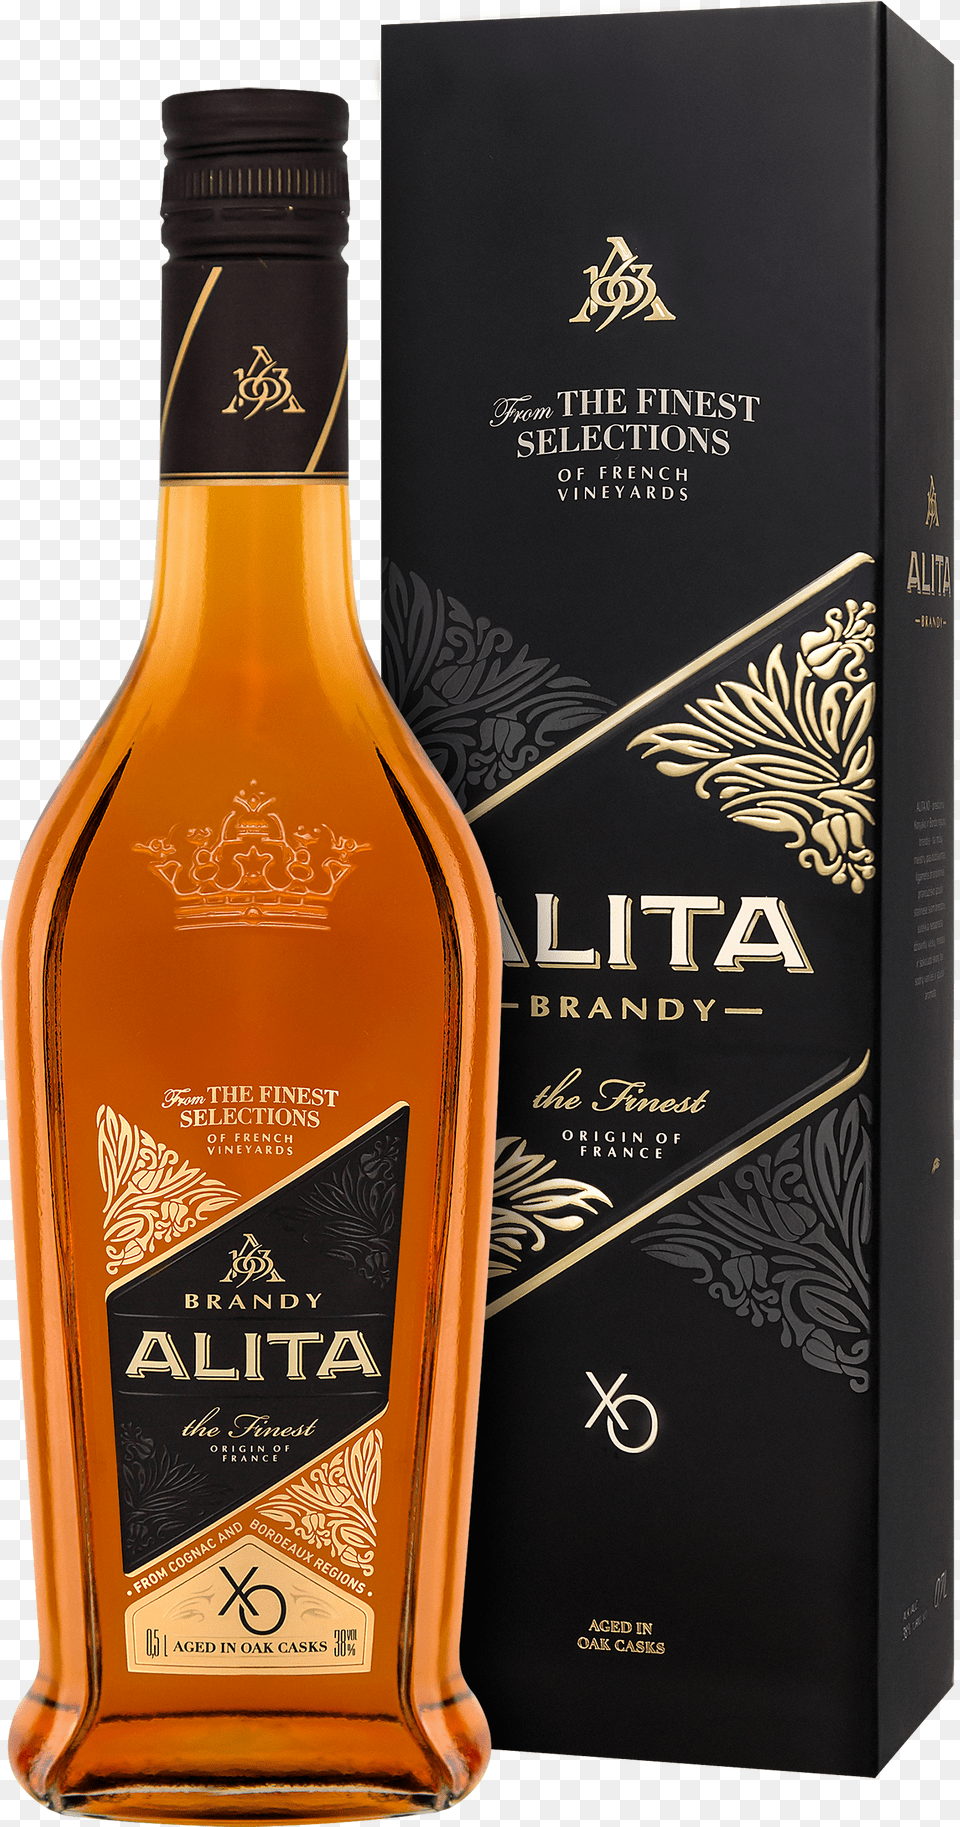 Gift Box Design For Alita Xo Brandy Vodka Bottle Whiskey Alita Brandy Xo Free Transparent Png